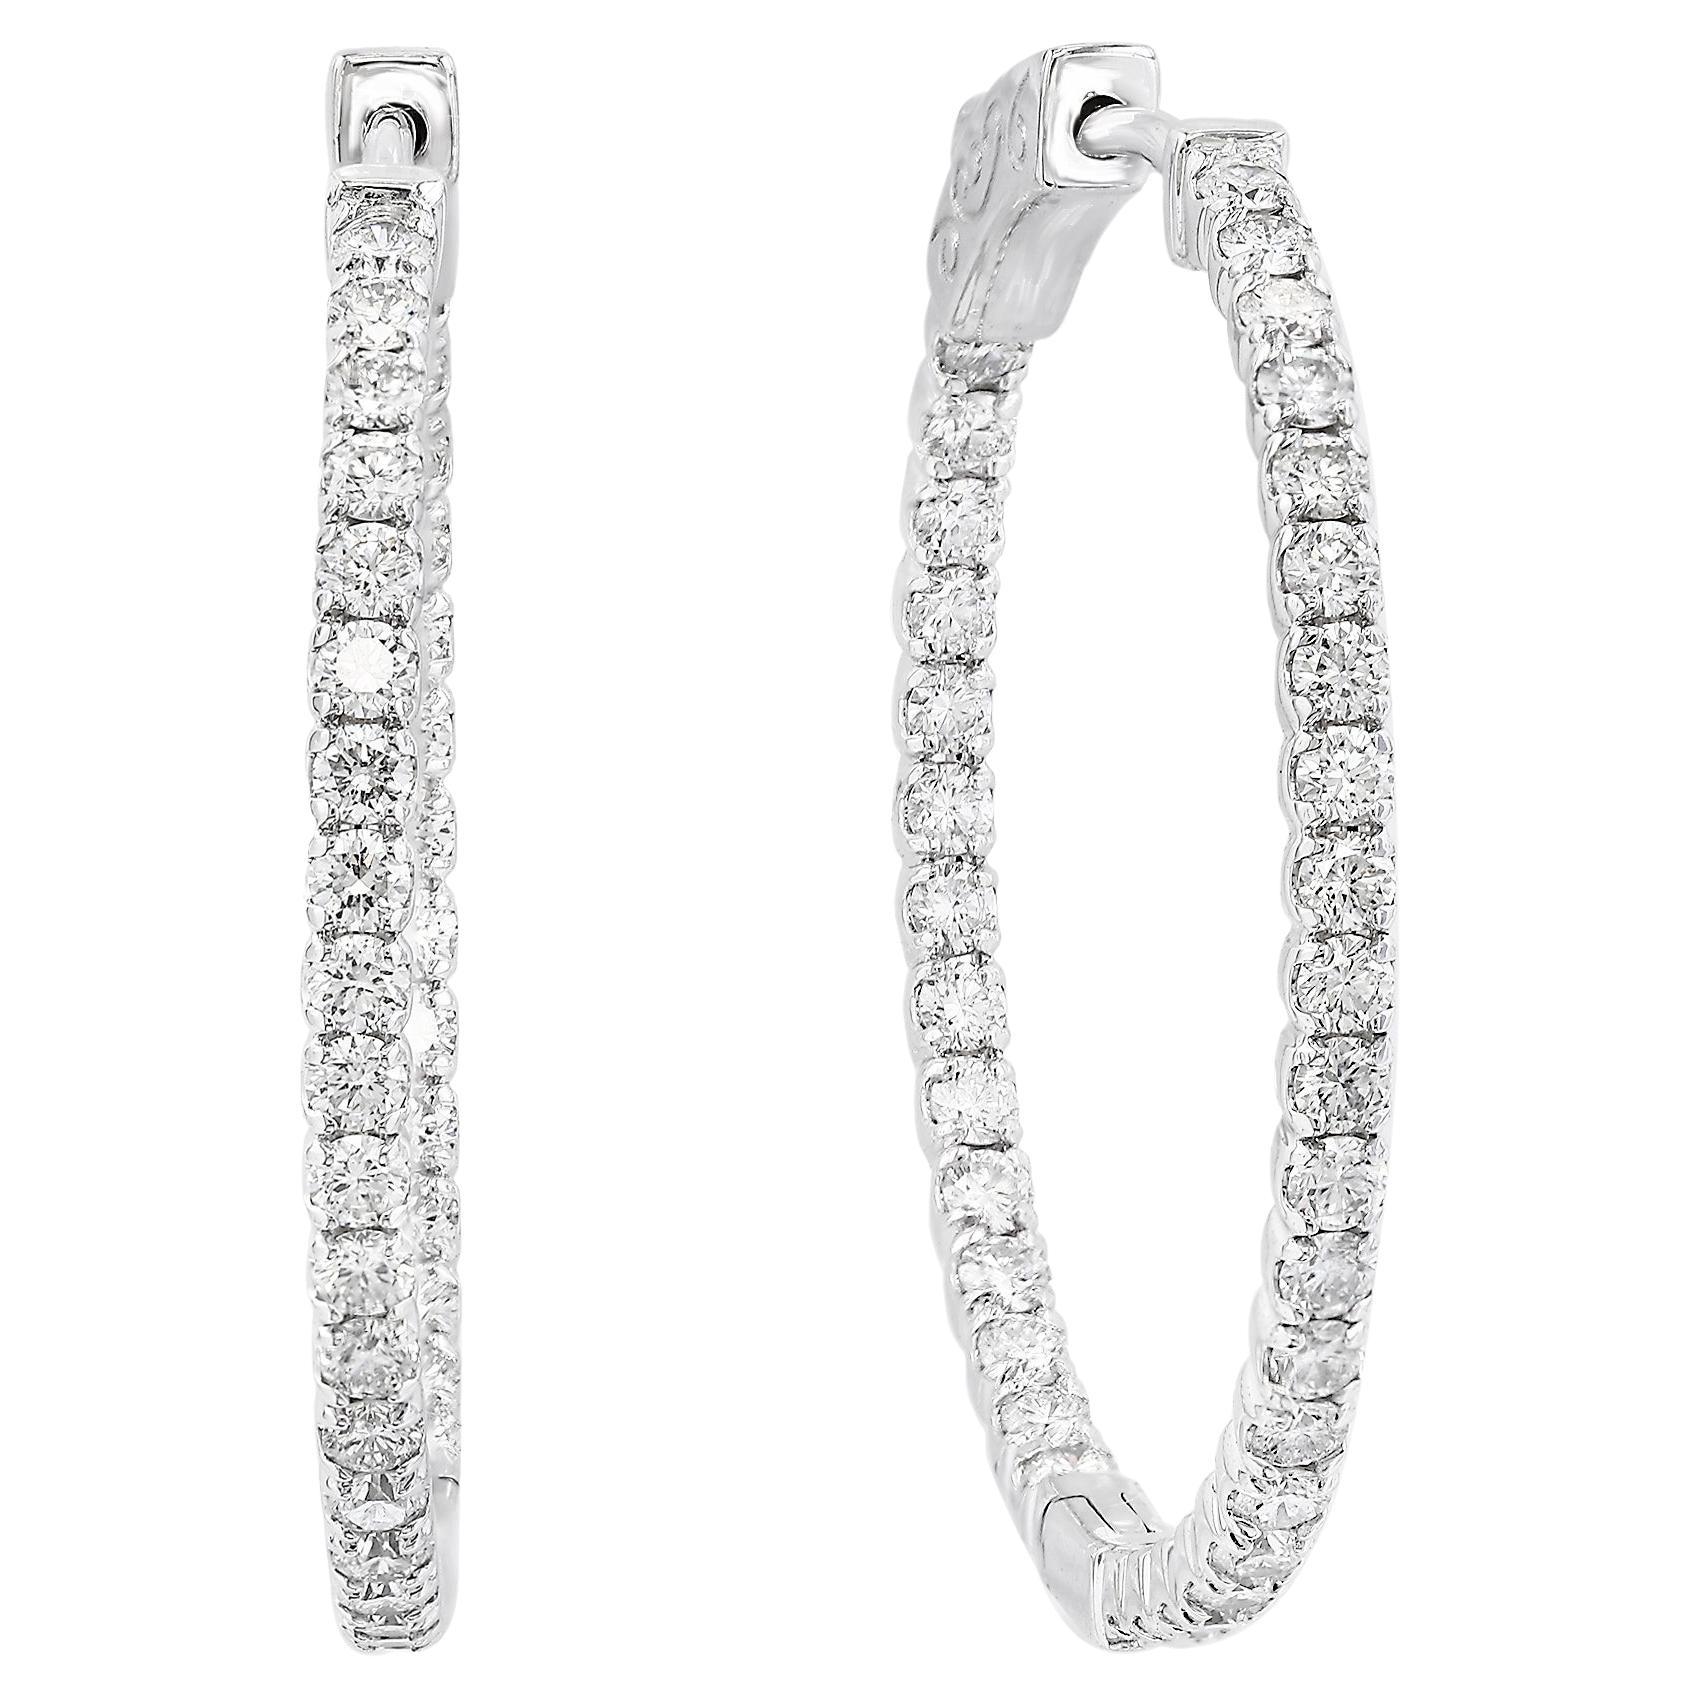 1.53 Carat Round cut Diamond Hoop Earrings in 14K White Gold